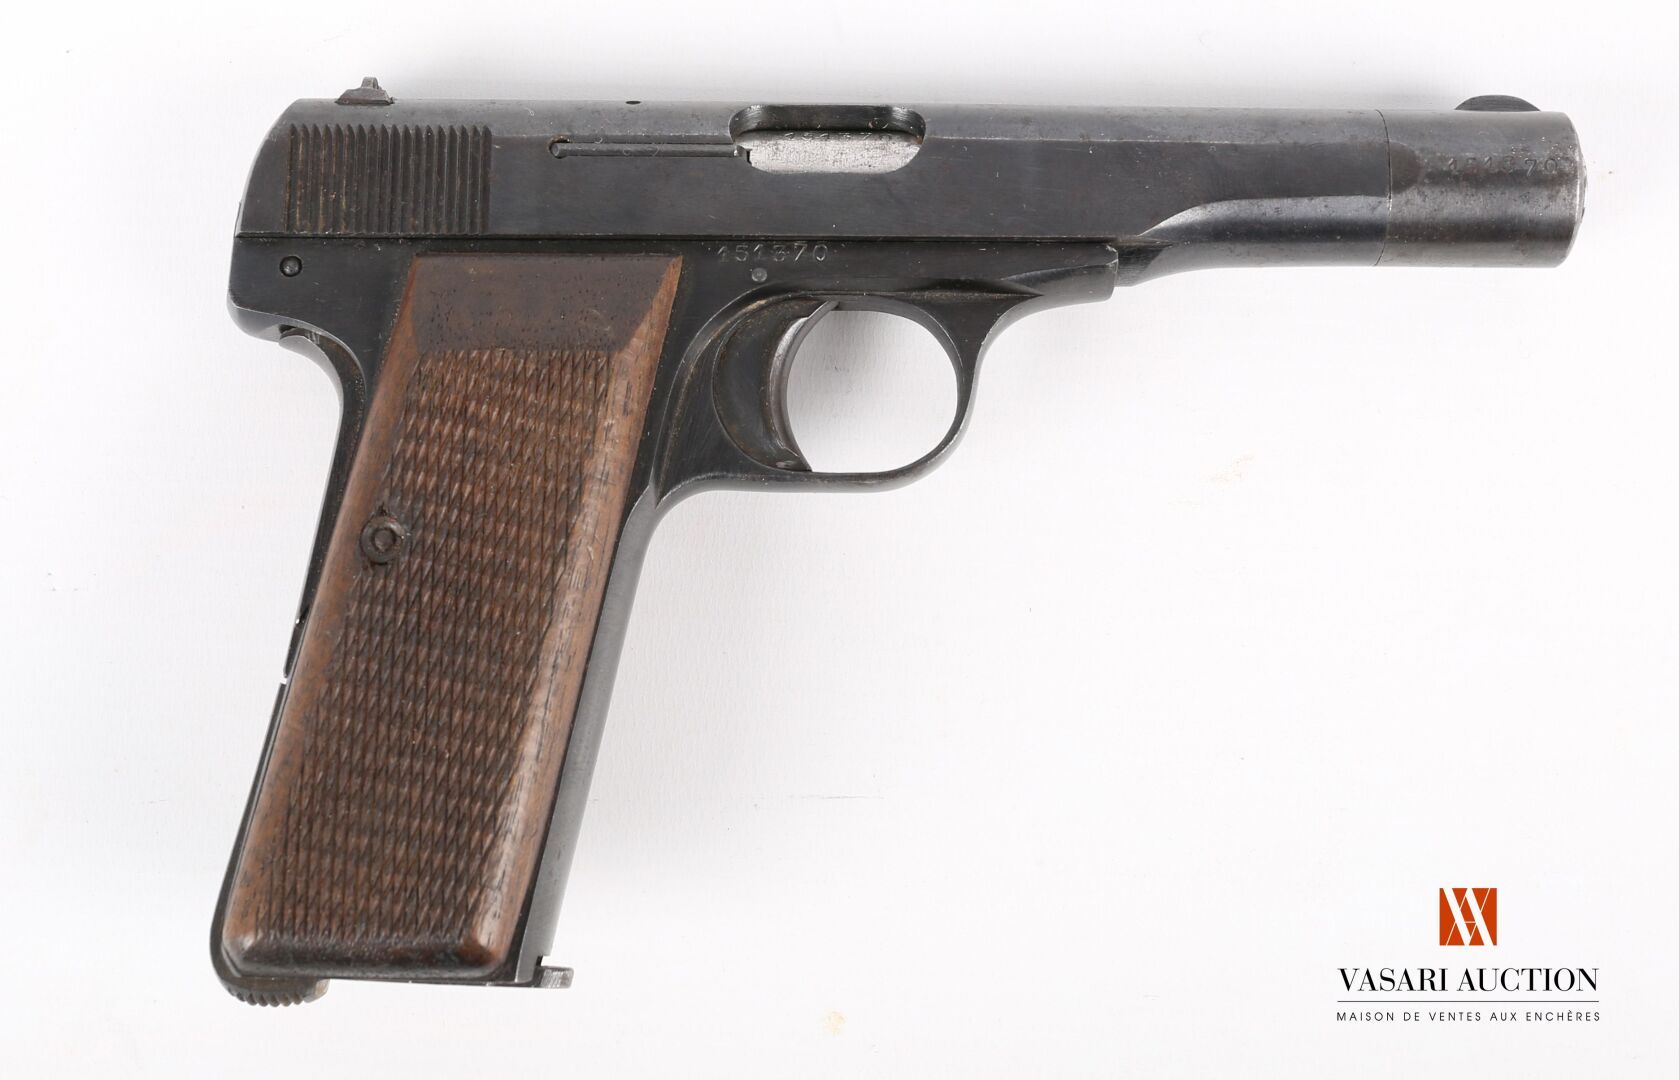 Null 注意B类武器--须经县级授权的空白或发放的武器

FN手枪，型号1910/22，口径7.65勃朗宁，后膛上有很好的标记 Fabrique Nation&hellip;